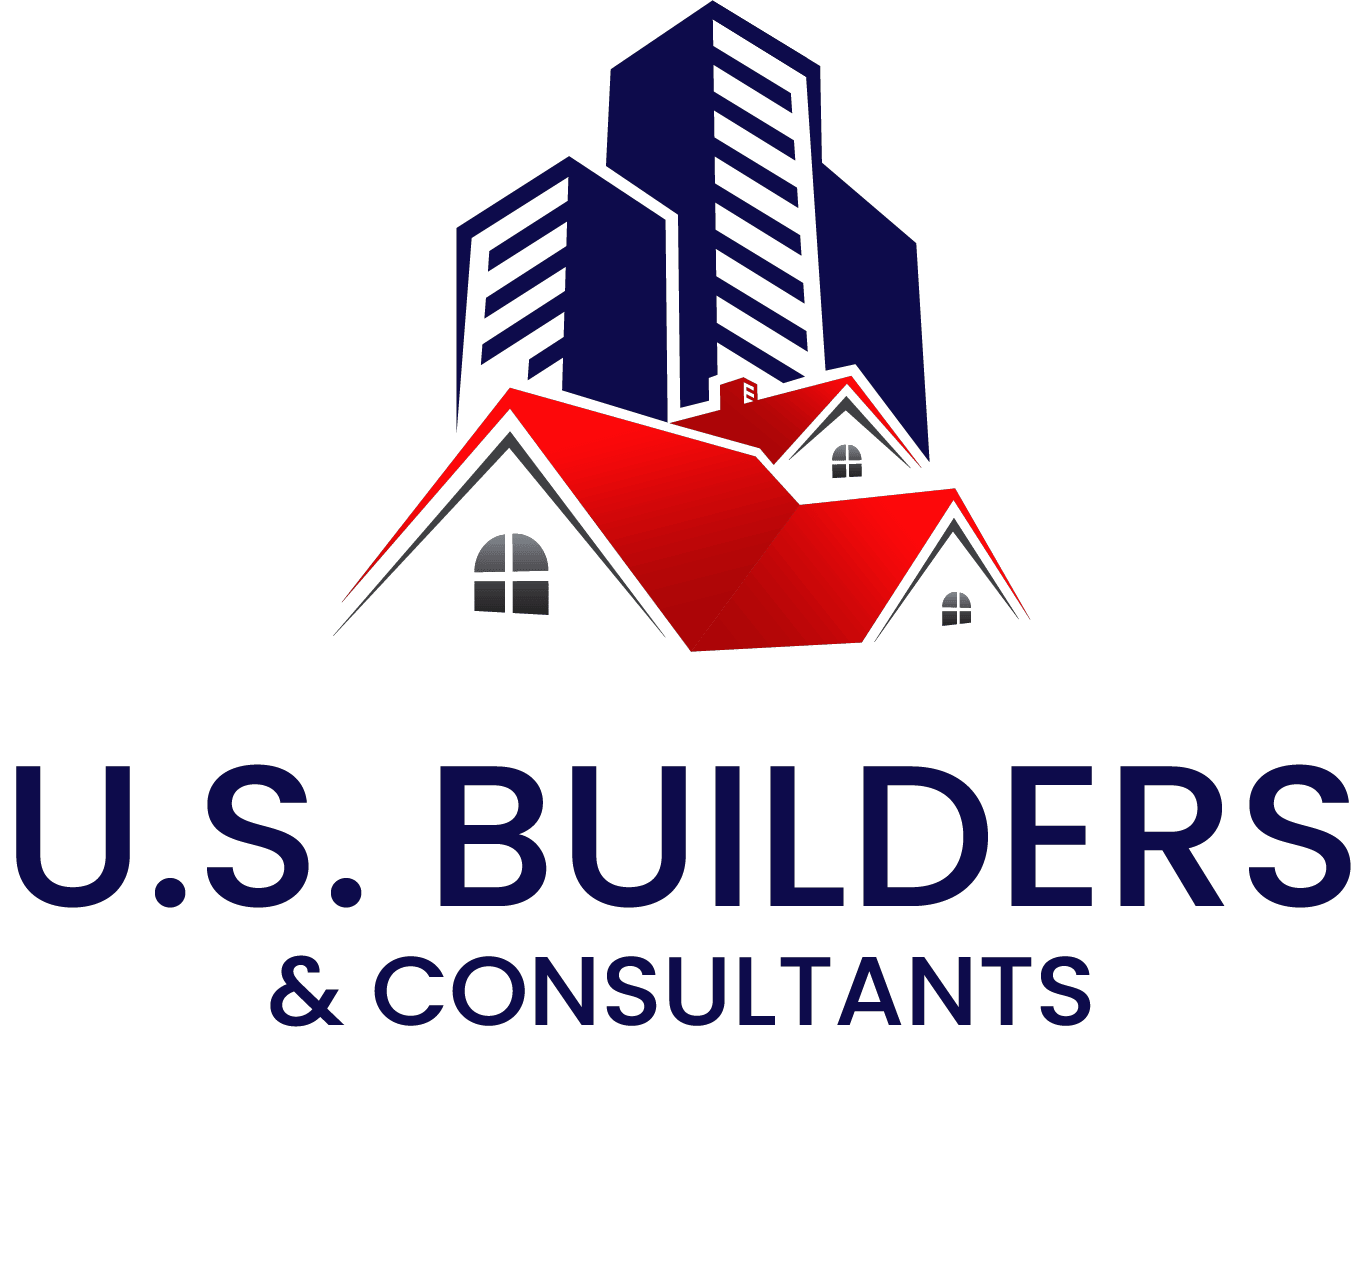 U.S. Builders (Construction) (Copy)